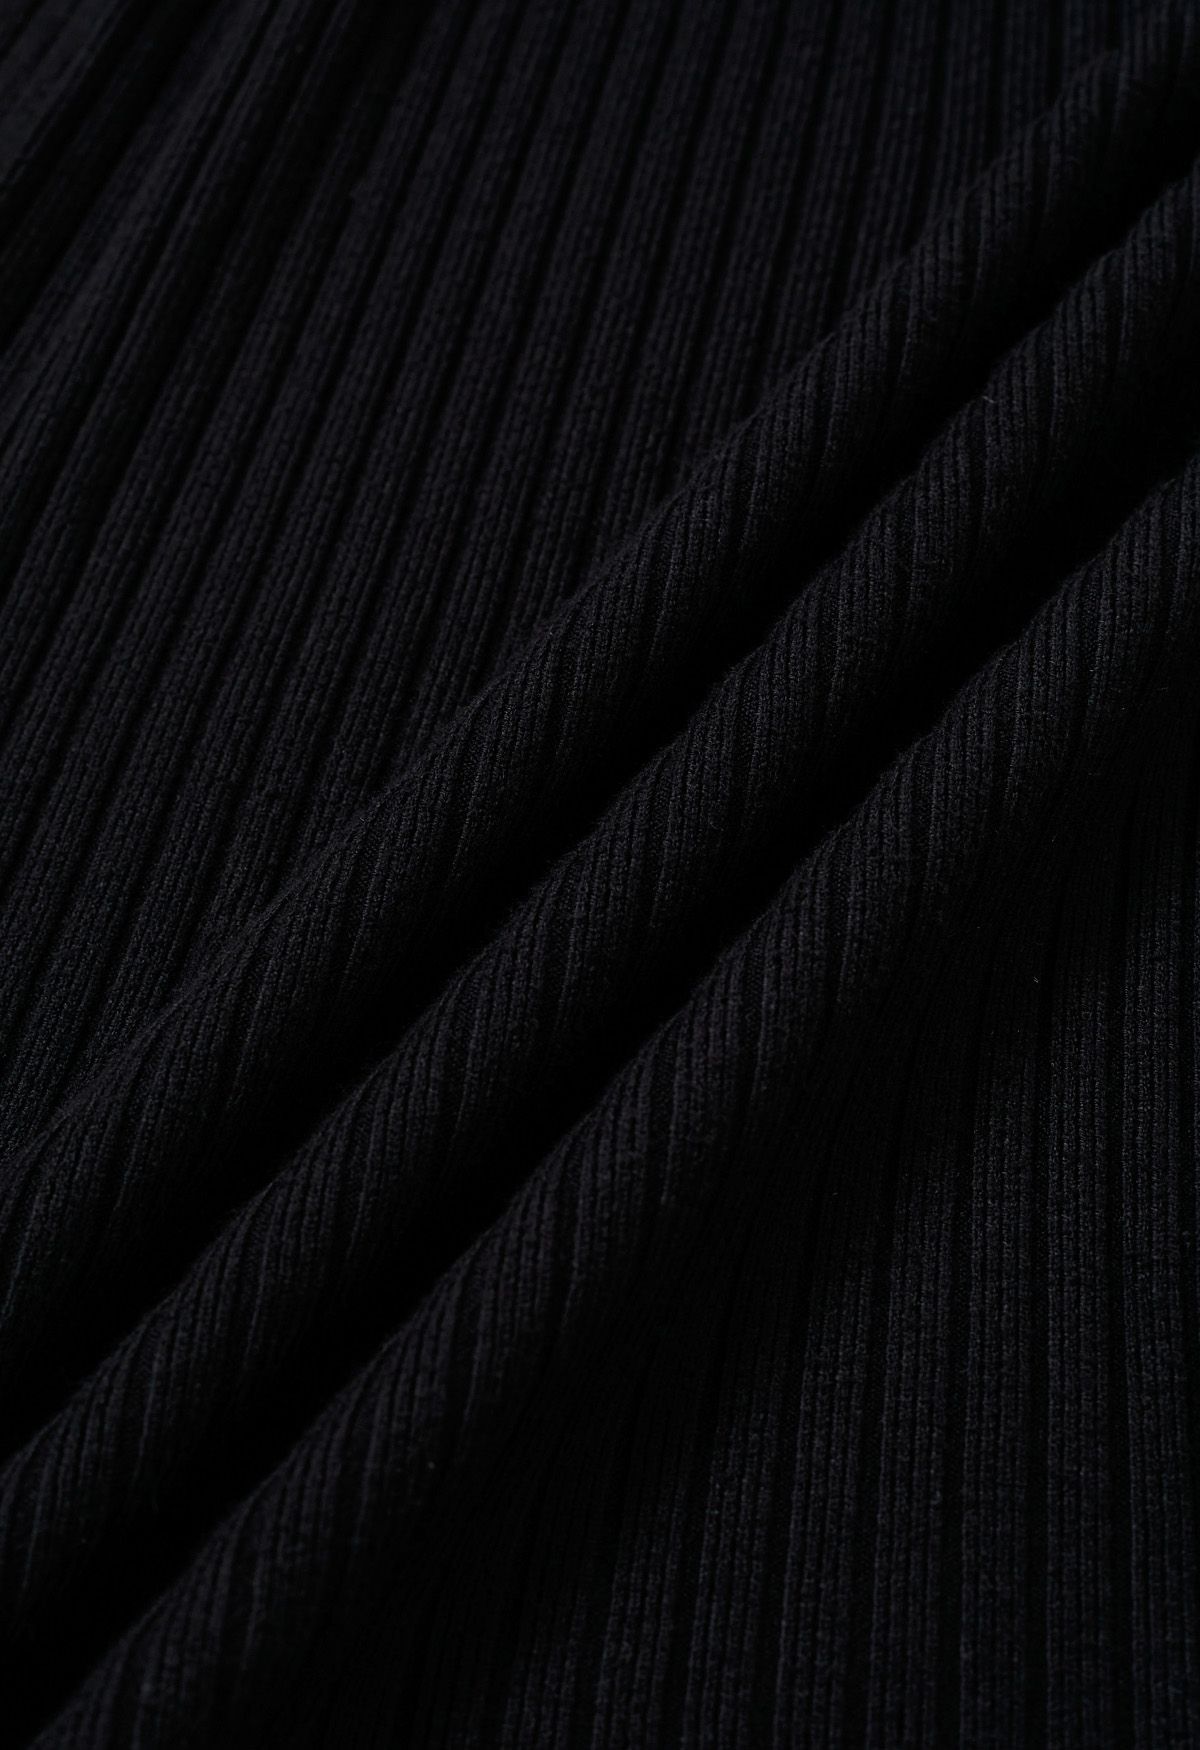 Graceful Feather Trim Surplice Neck Knit Dress in Black